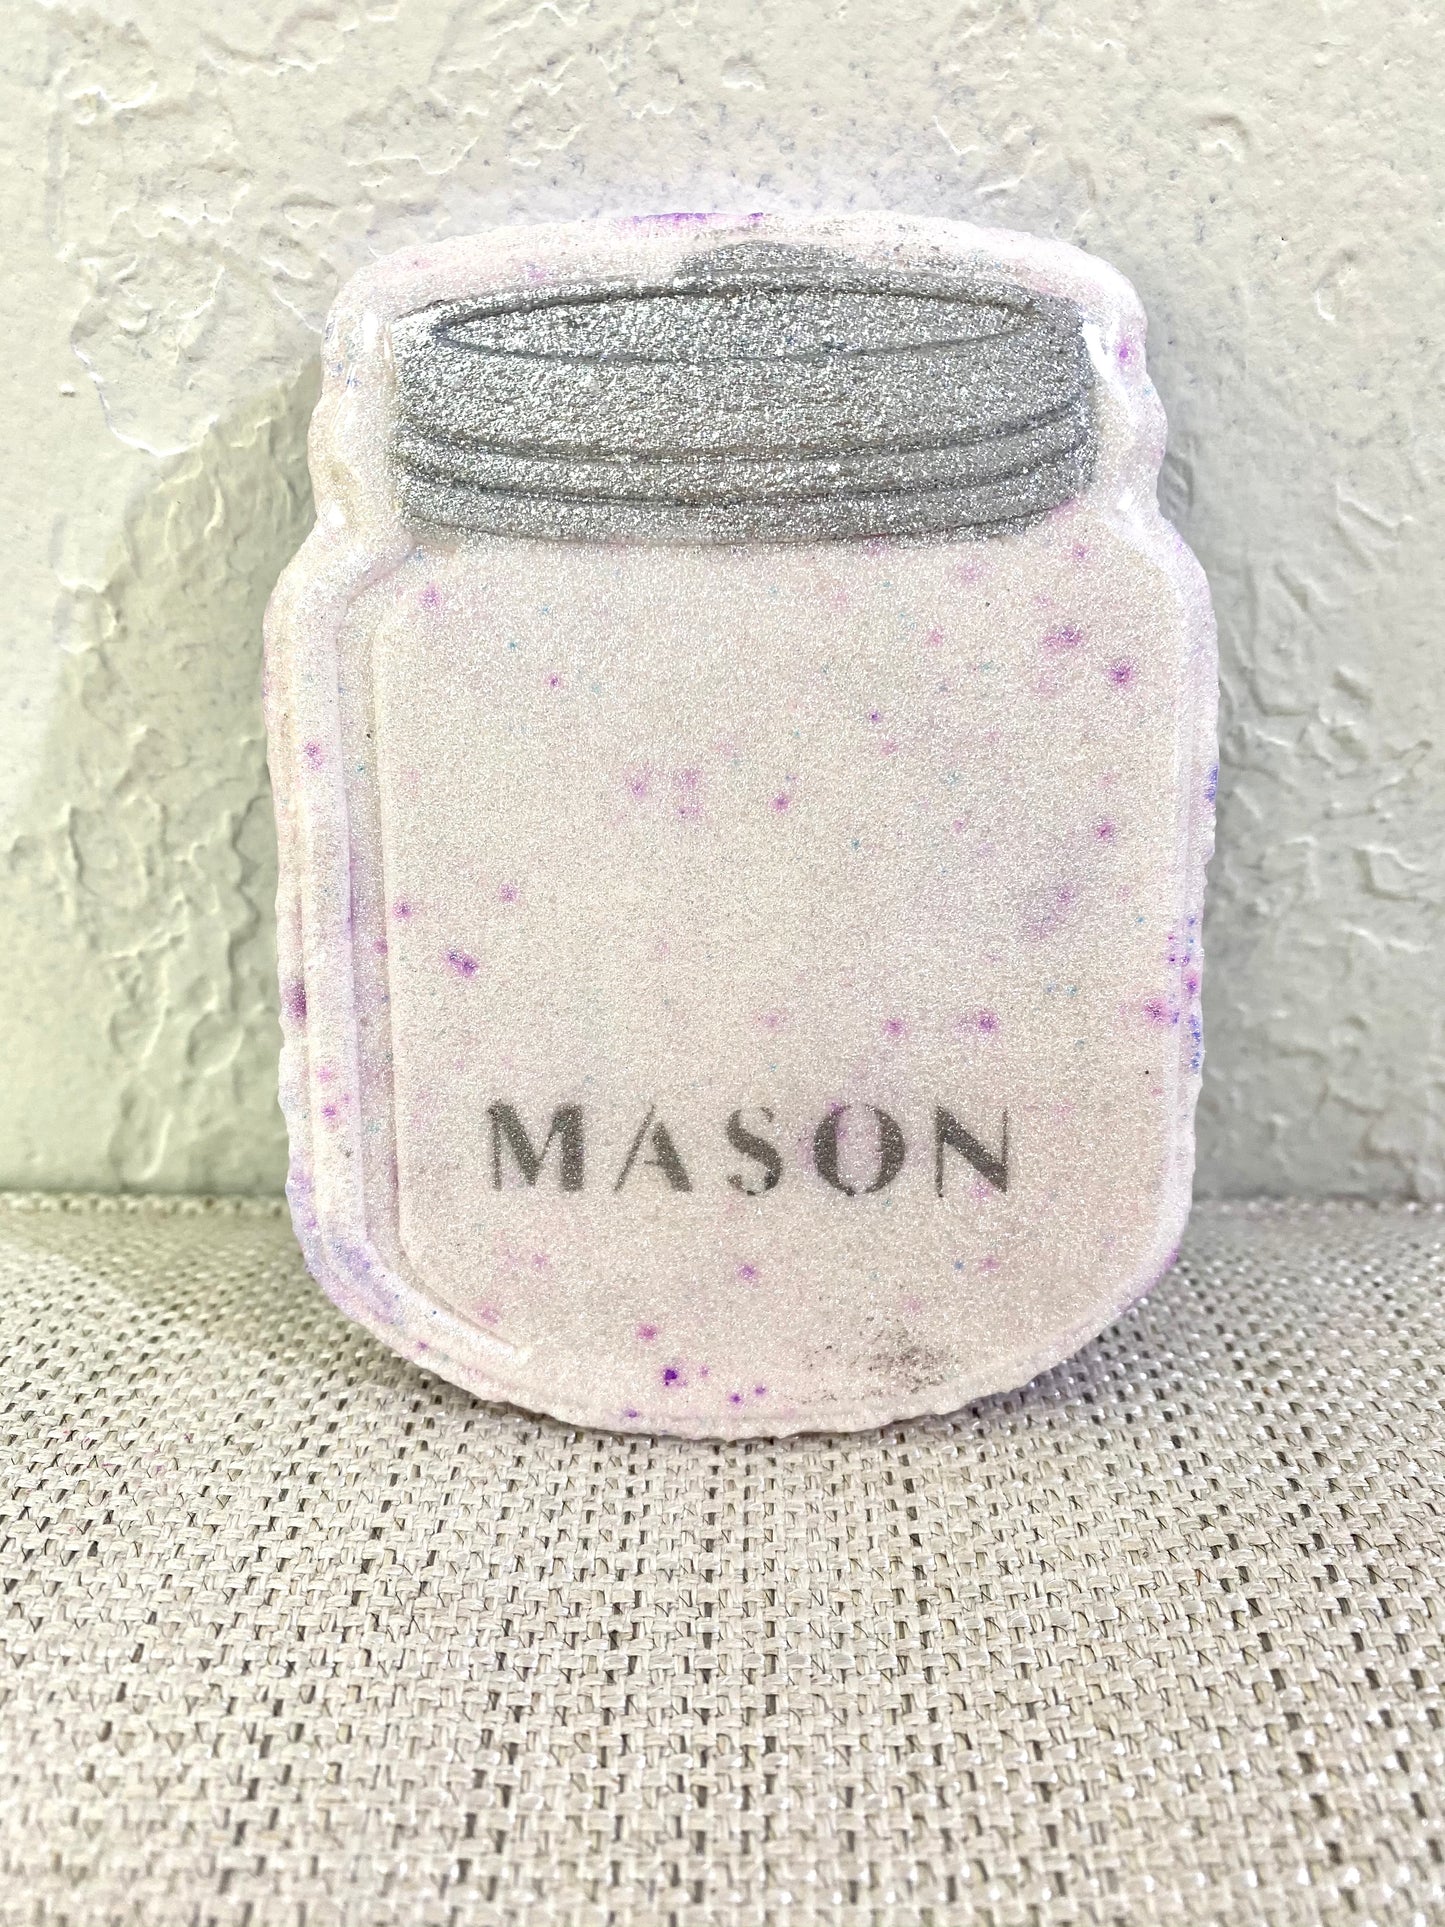 Mason Jar bath bomb